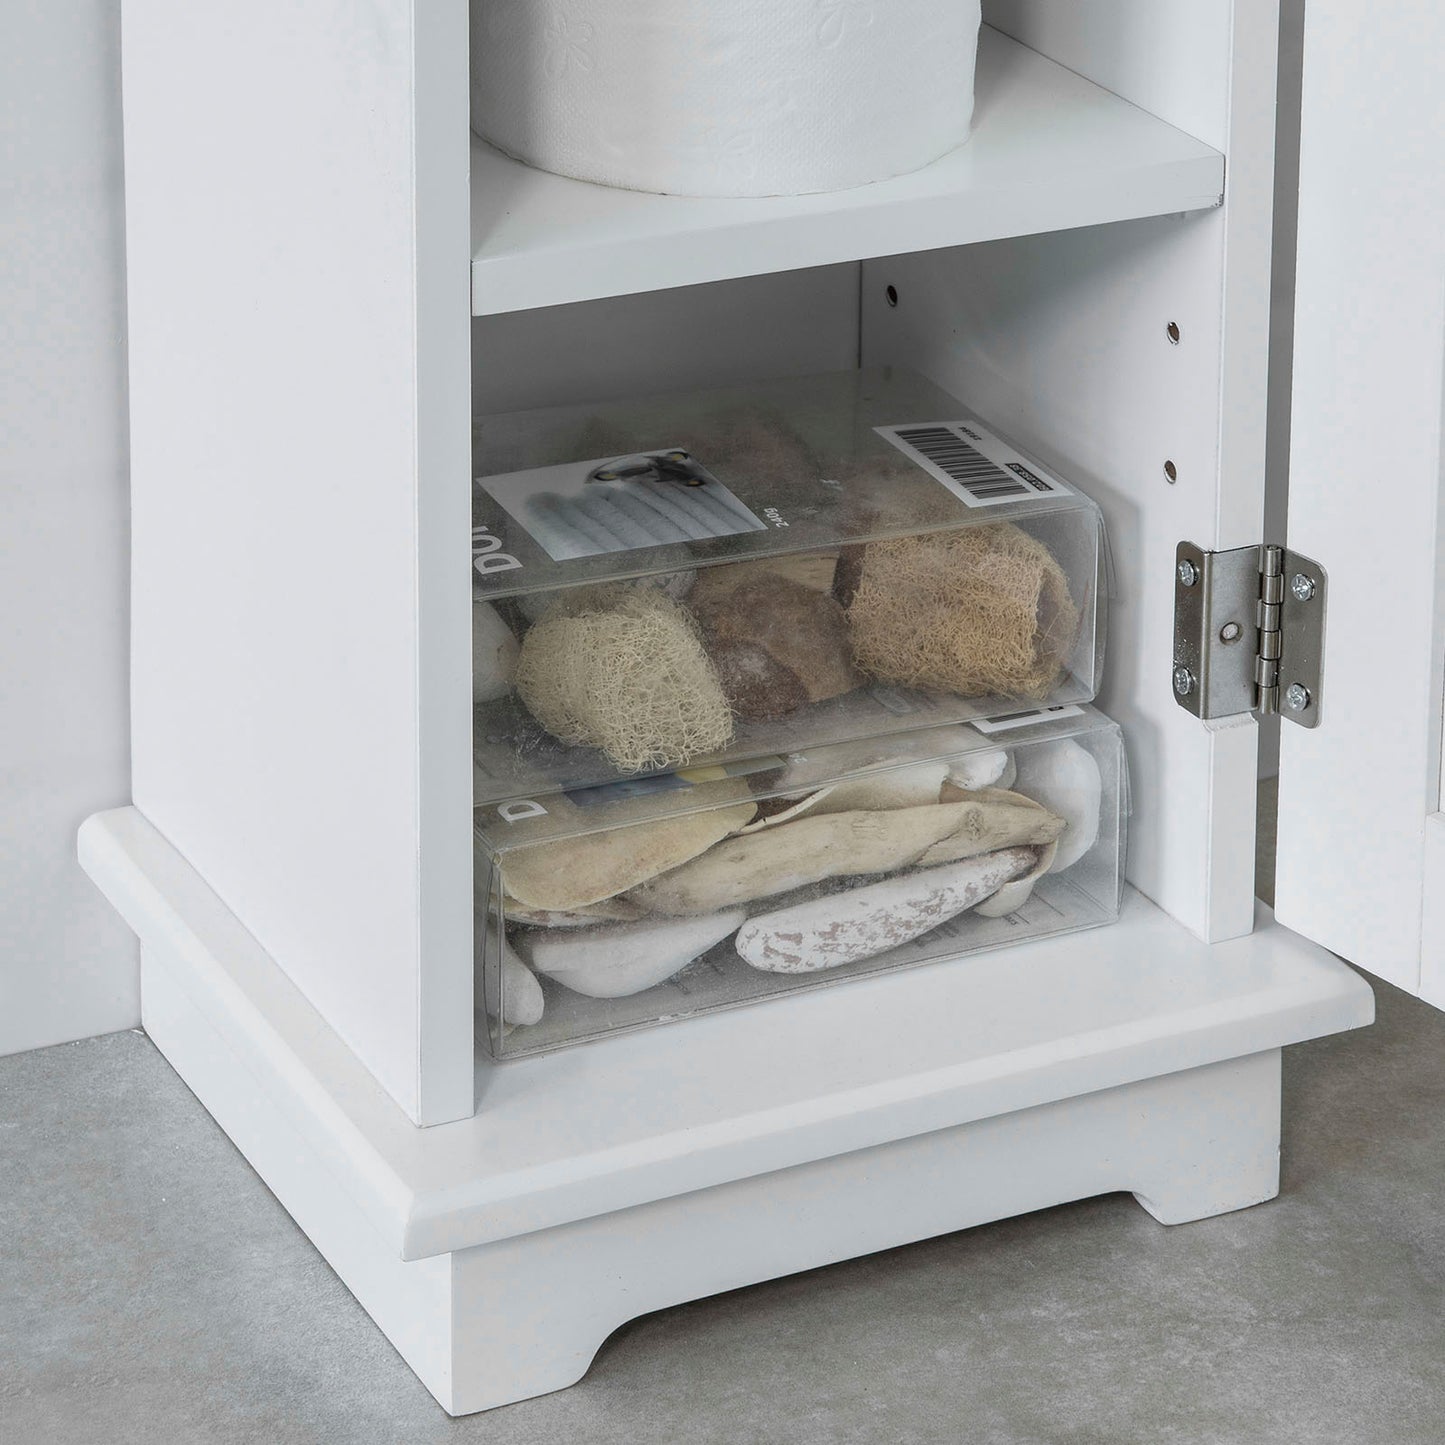 SoBuy Freestanding Toilet Roll Holder with Storage, Toilet Paper Dispenser, Bathroom Cabinet, White, 20x100x18 cm